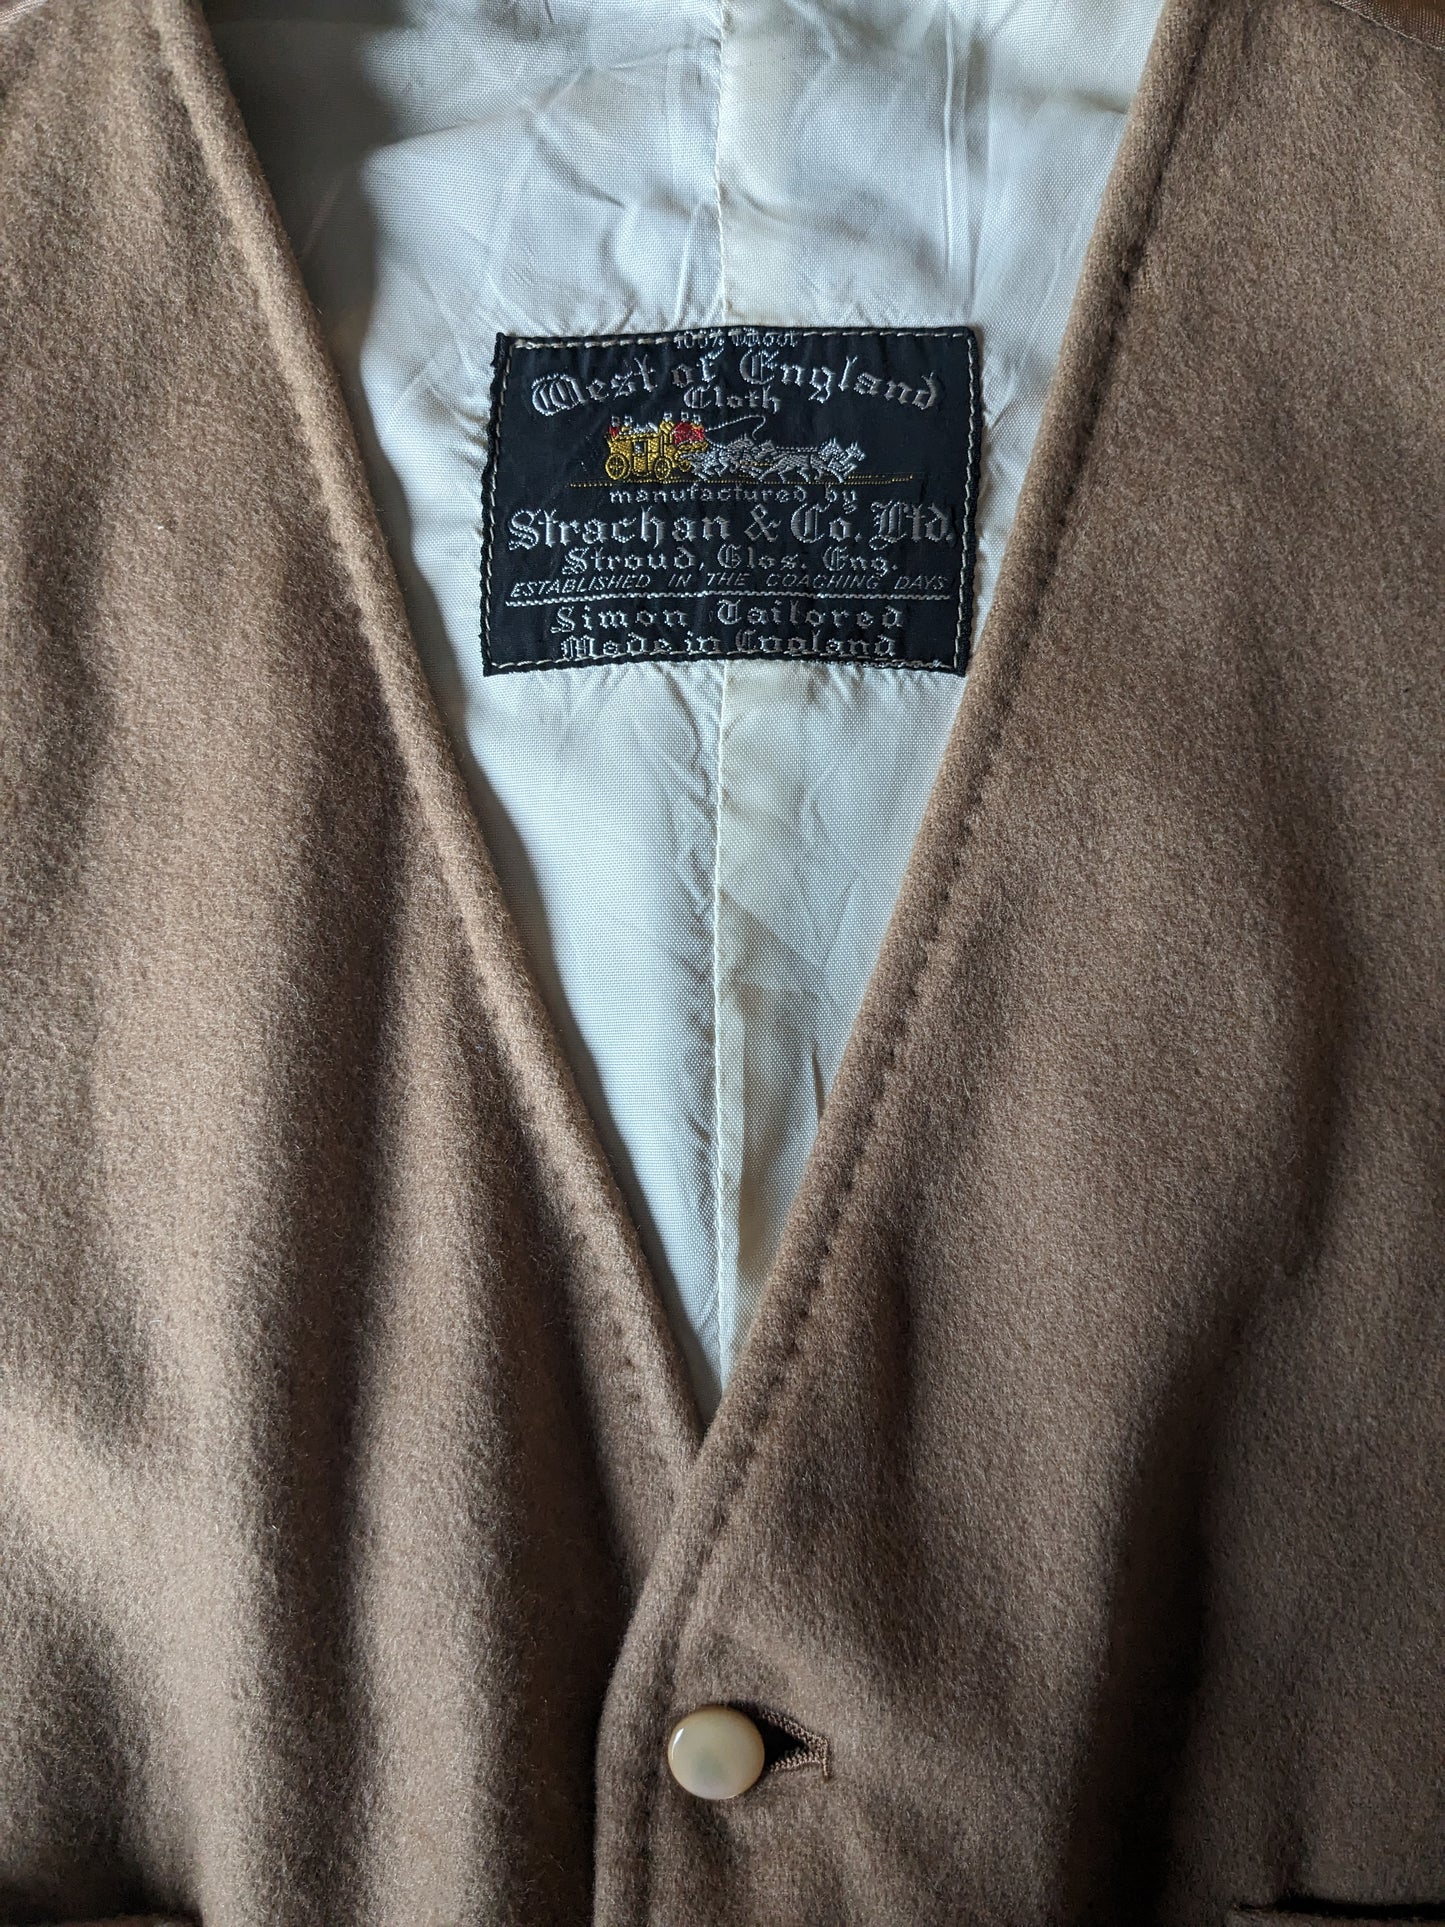 Strachan & Co Ltd Woolen Gilet. Camel brown colored. Size XL.